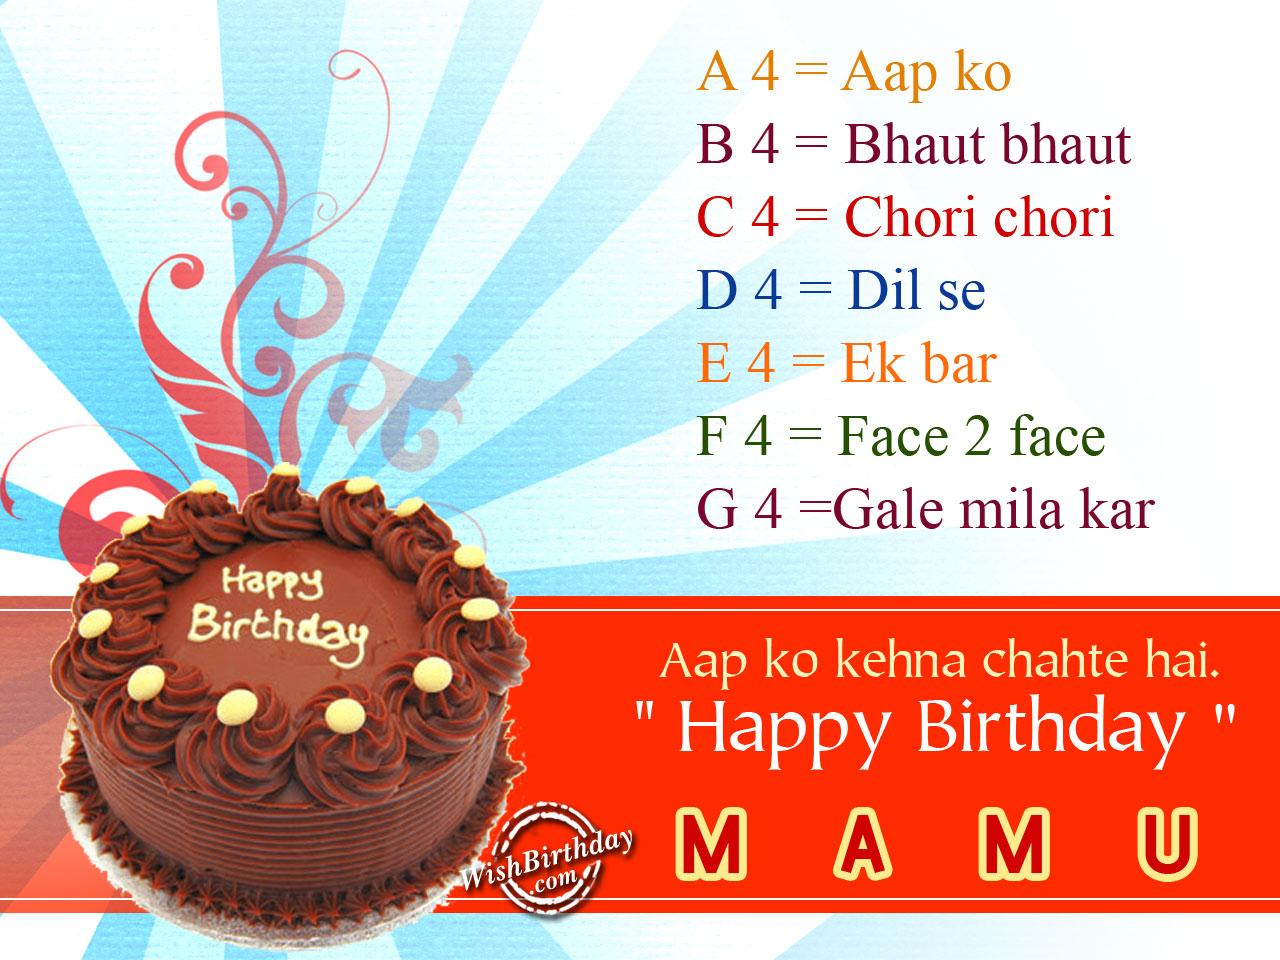 Mama ji happy birthday